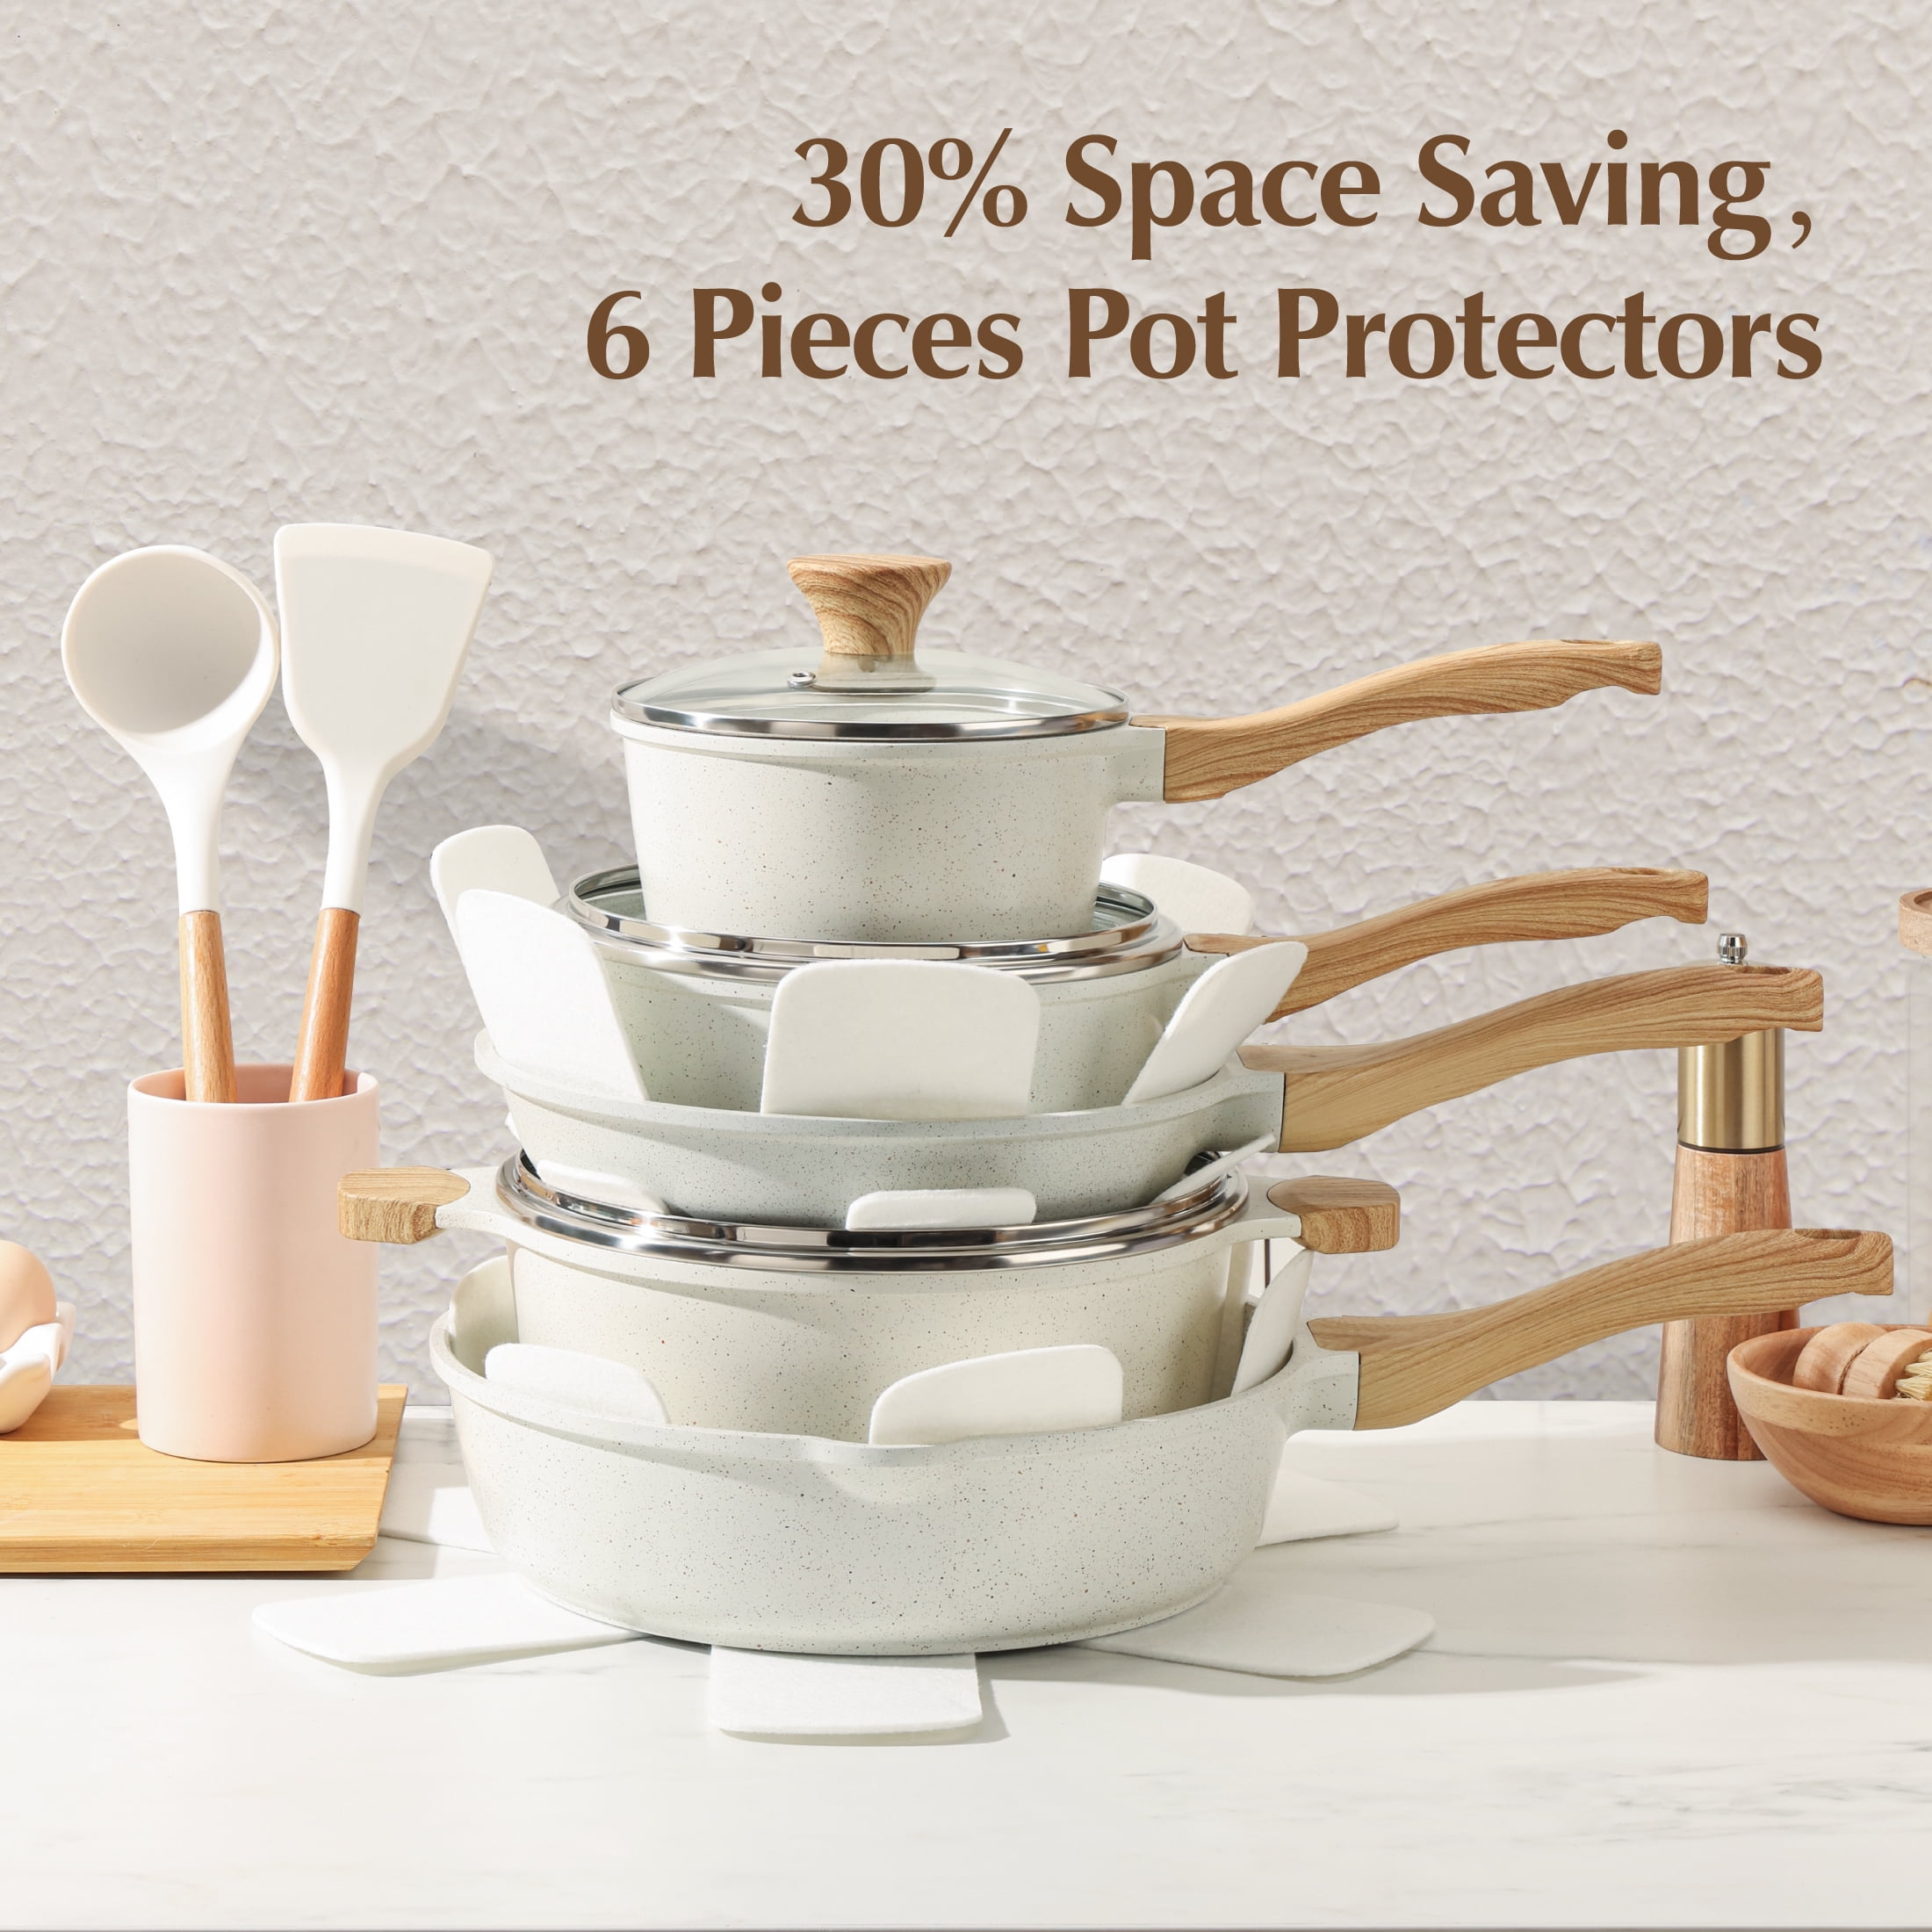 SENSARTE Ceramic Nonstick Pots and Pans Set 14pcs, Healthy Cookware Set,  Non-toxic Induction Kitchen Cooking Set, Dishwasher & Oven Safe